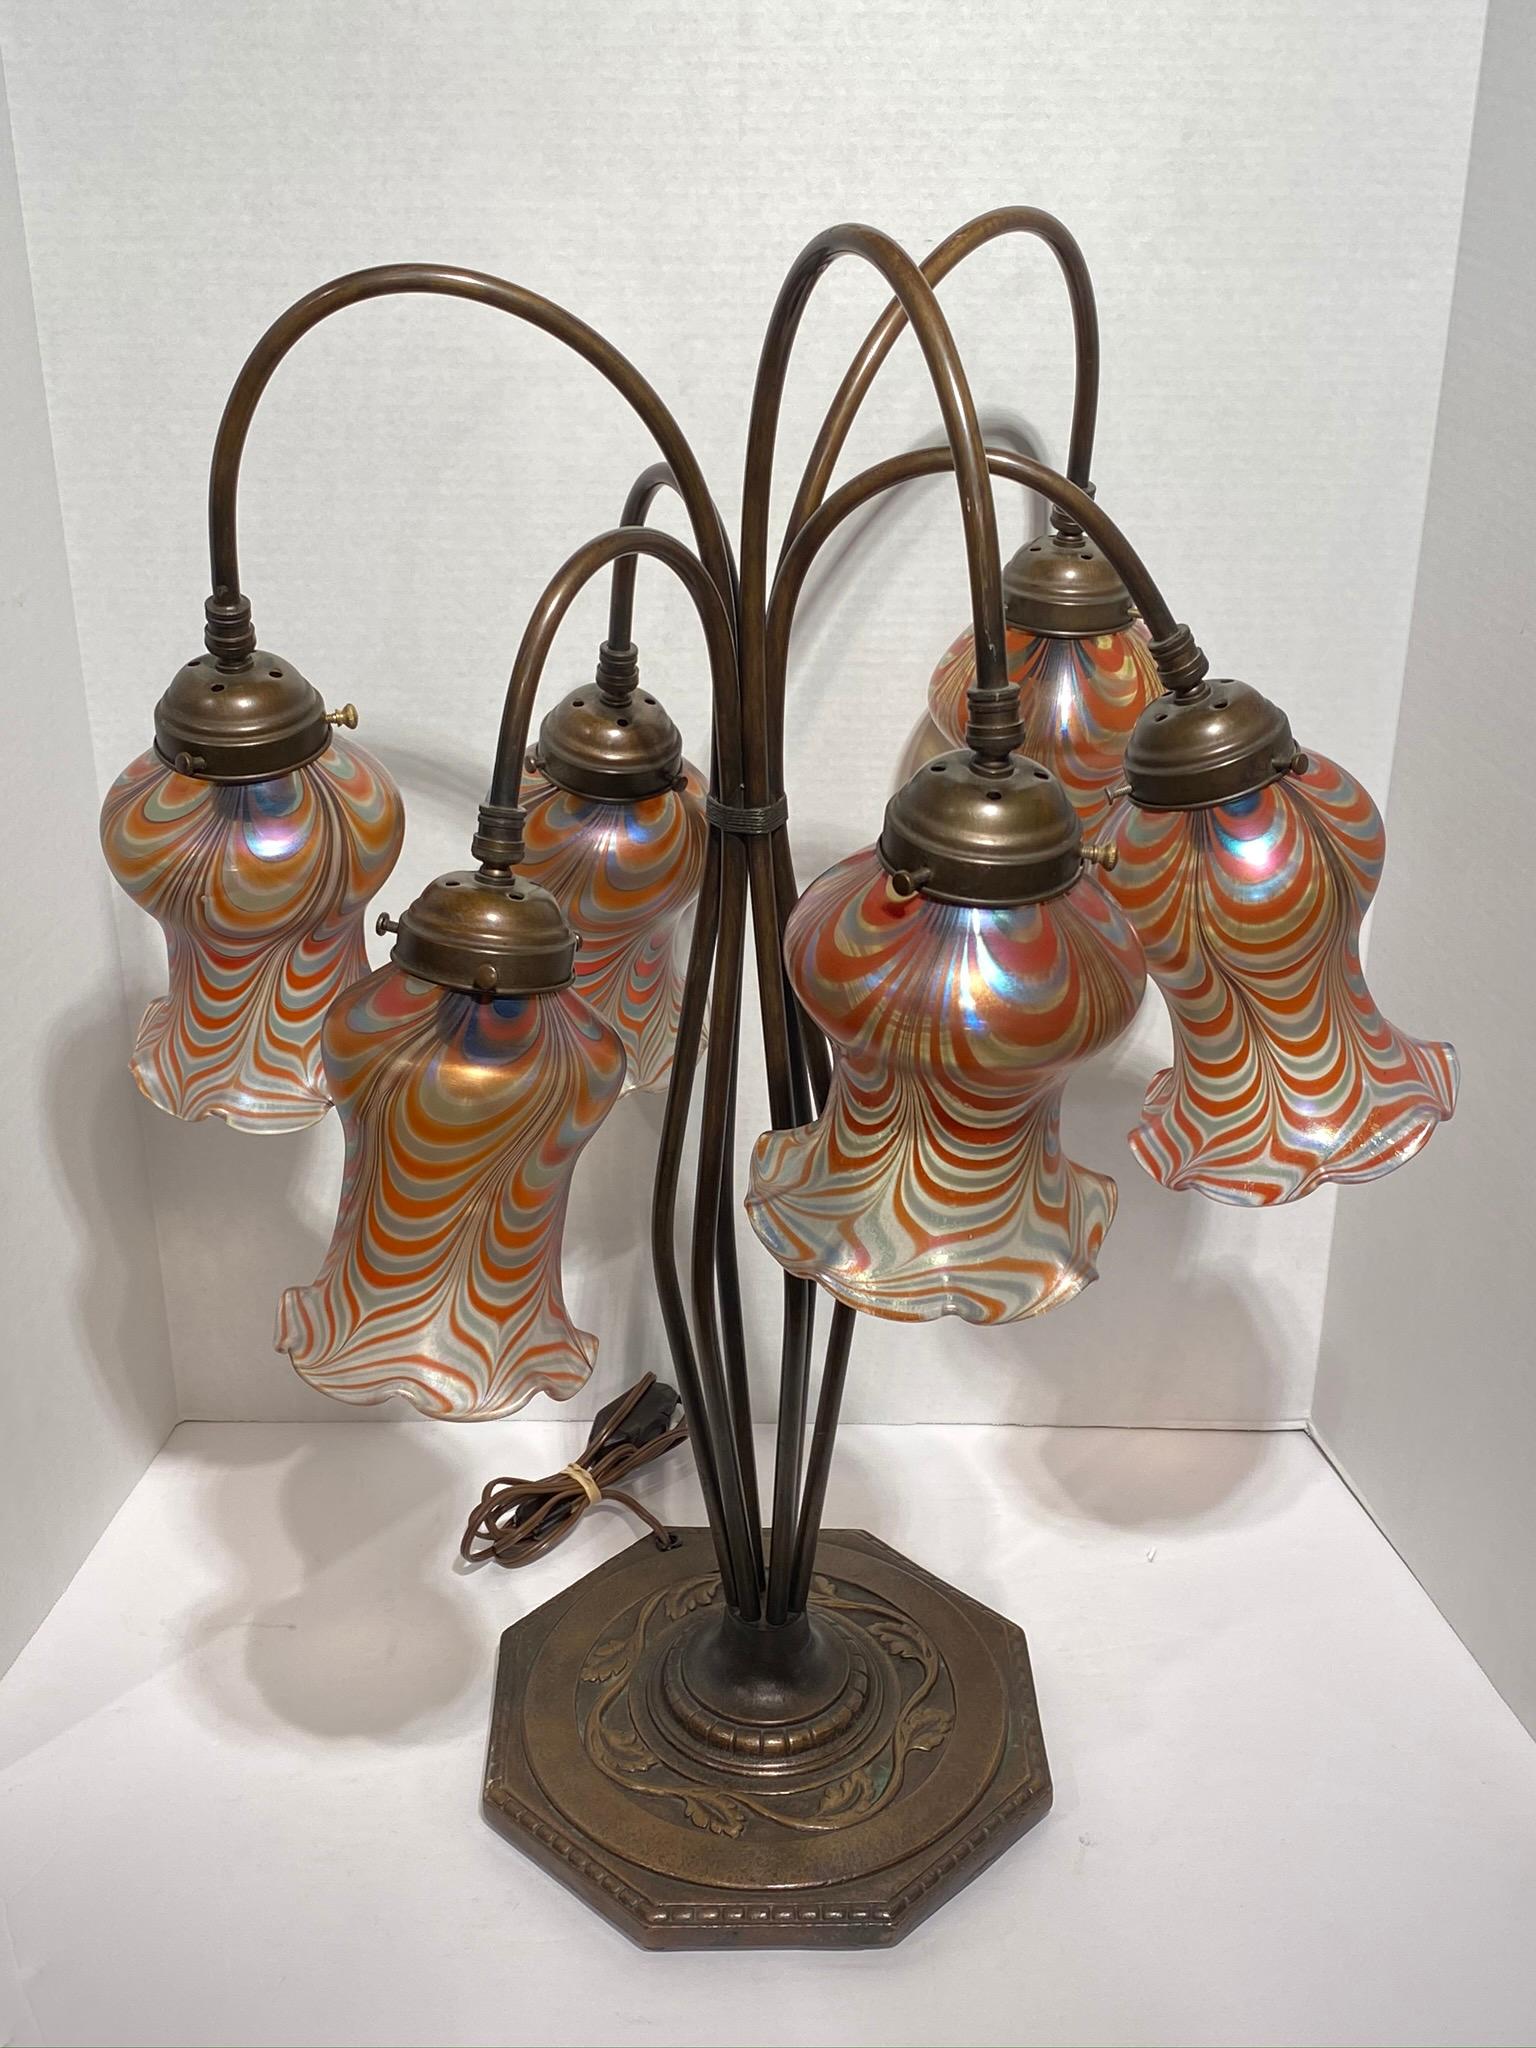 Arts & Crafts style metal and blown glass table lamp from Vandermark Merritt Glass Studios, circa 1972-1990.